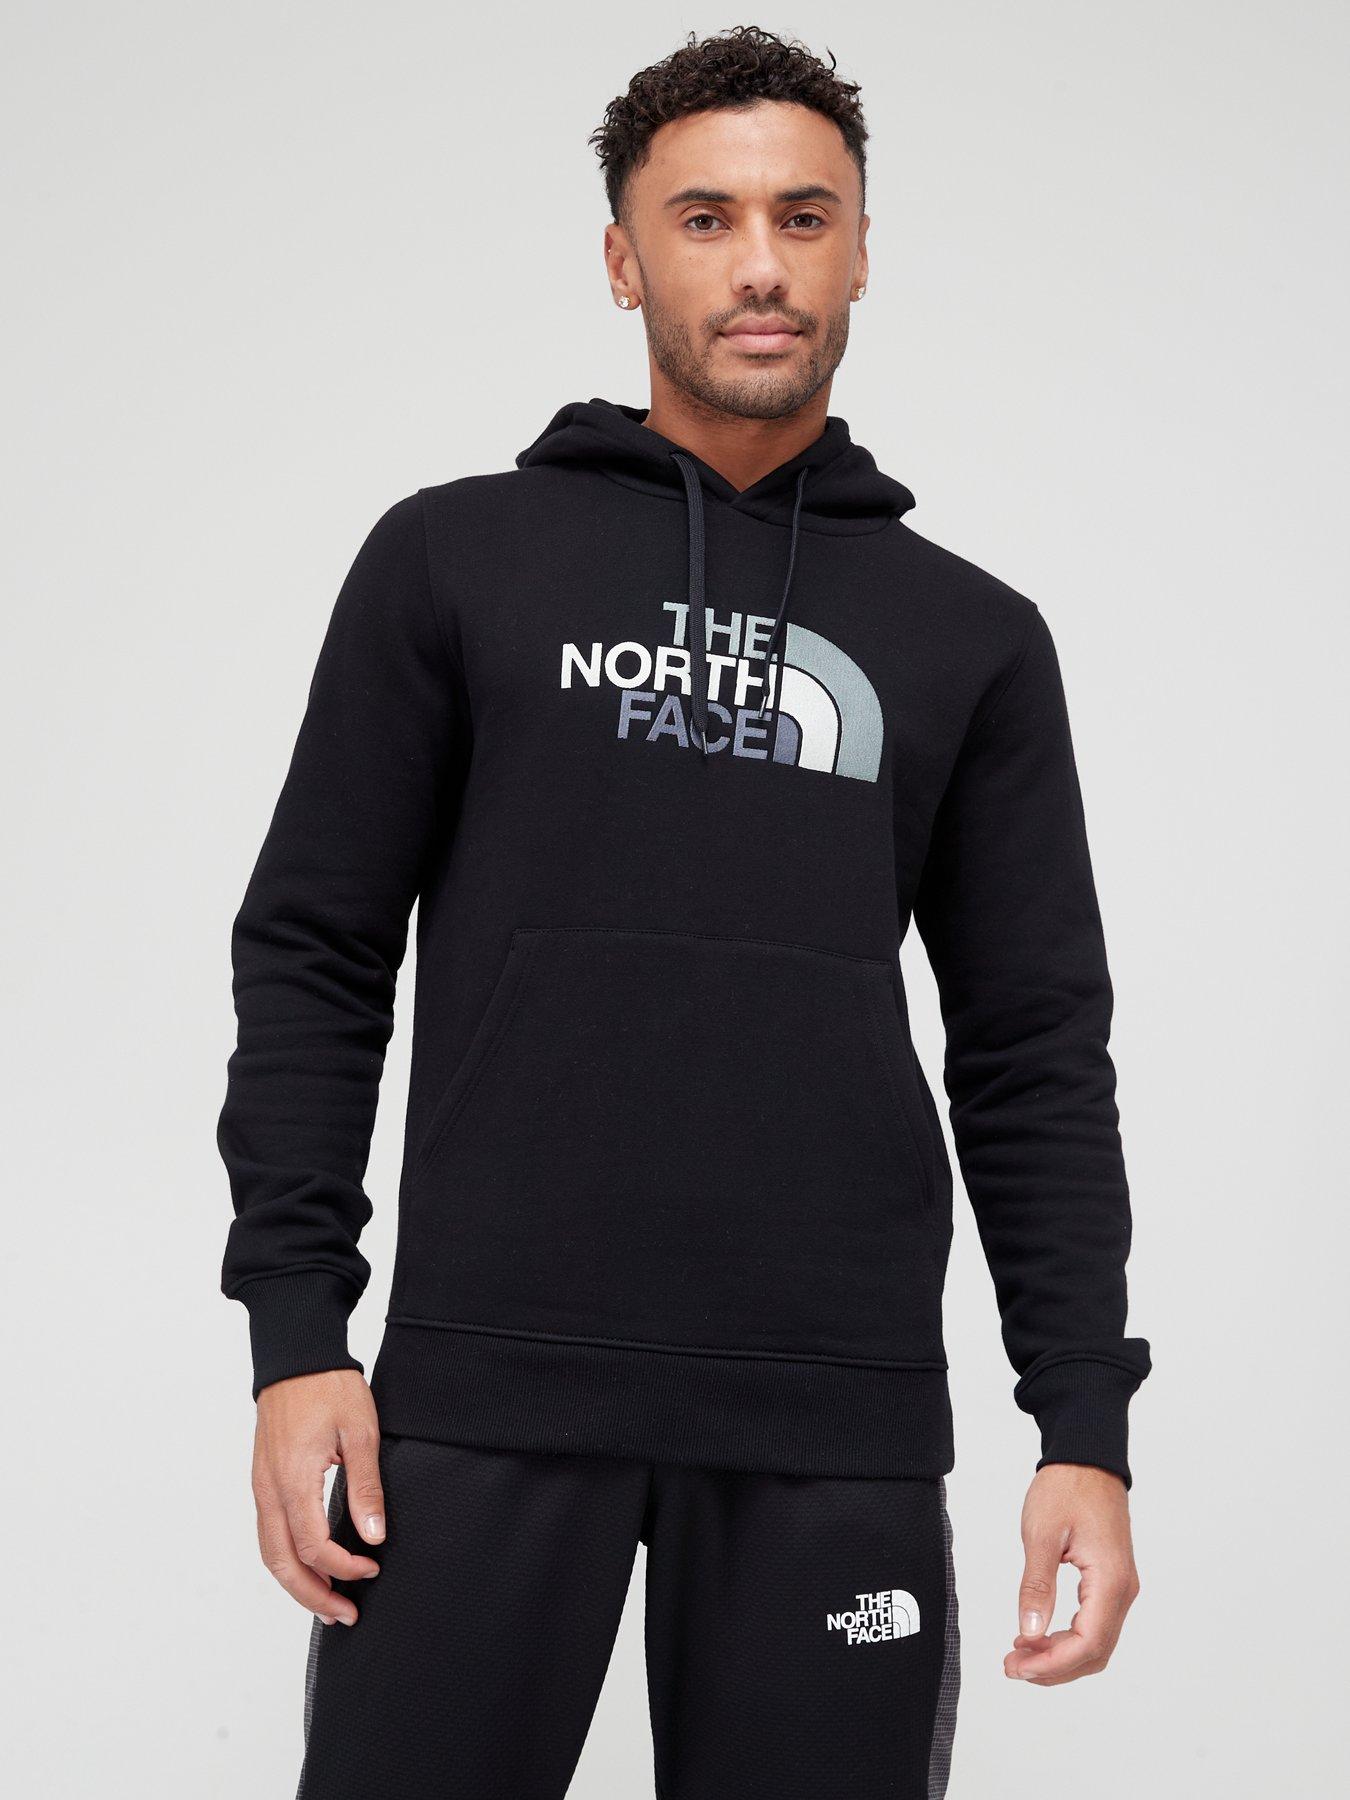 north face clothing uk